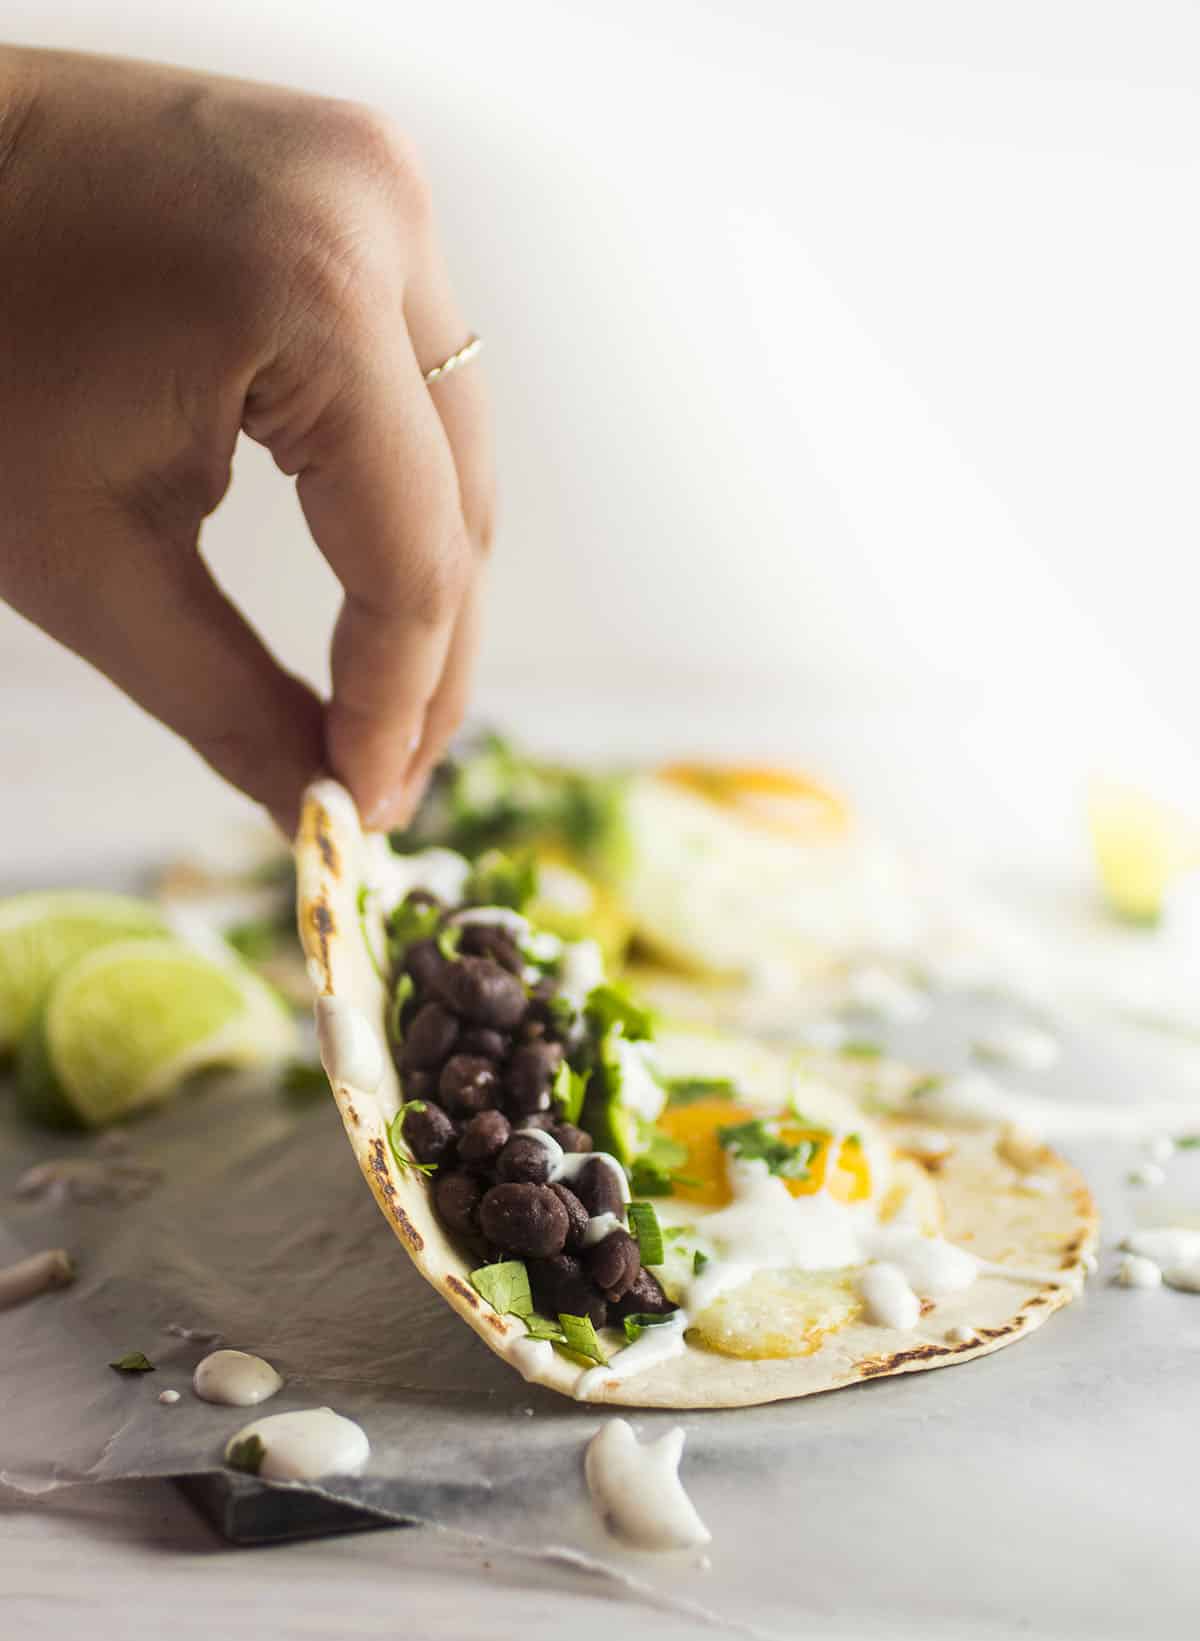 Hand folding a breakfast taco into shape.